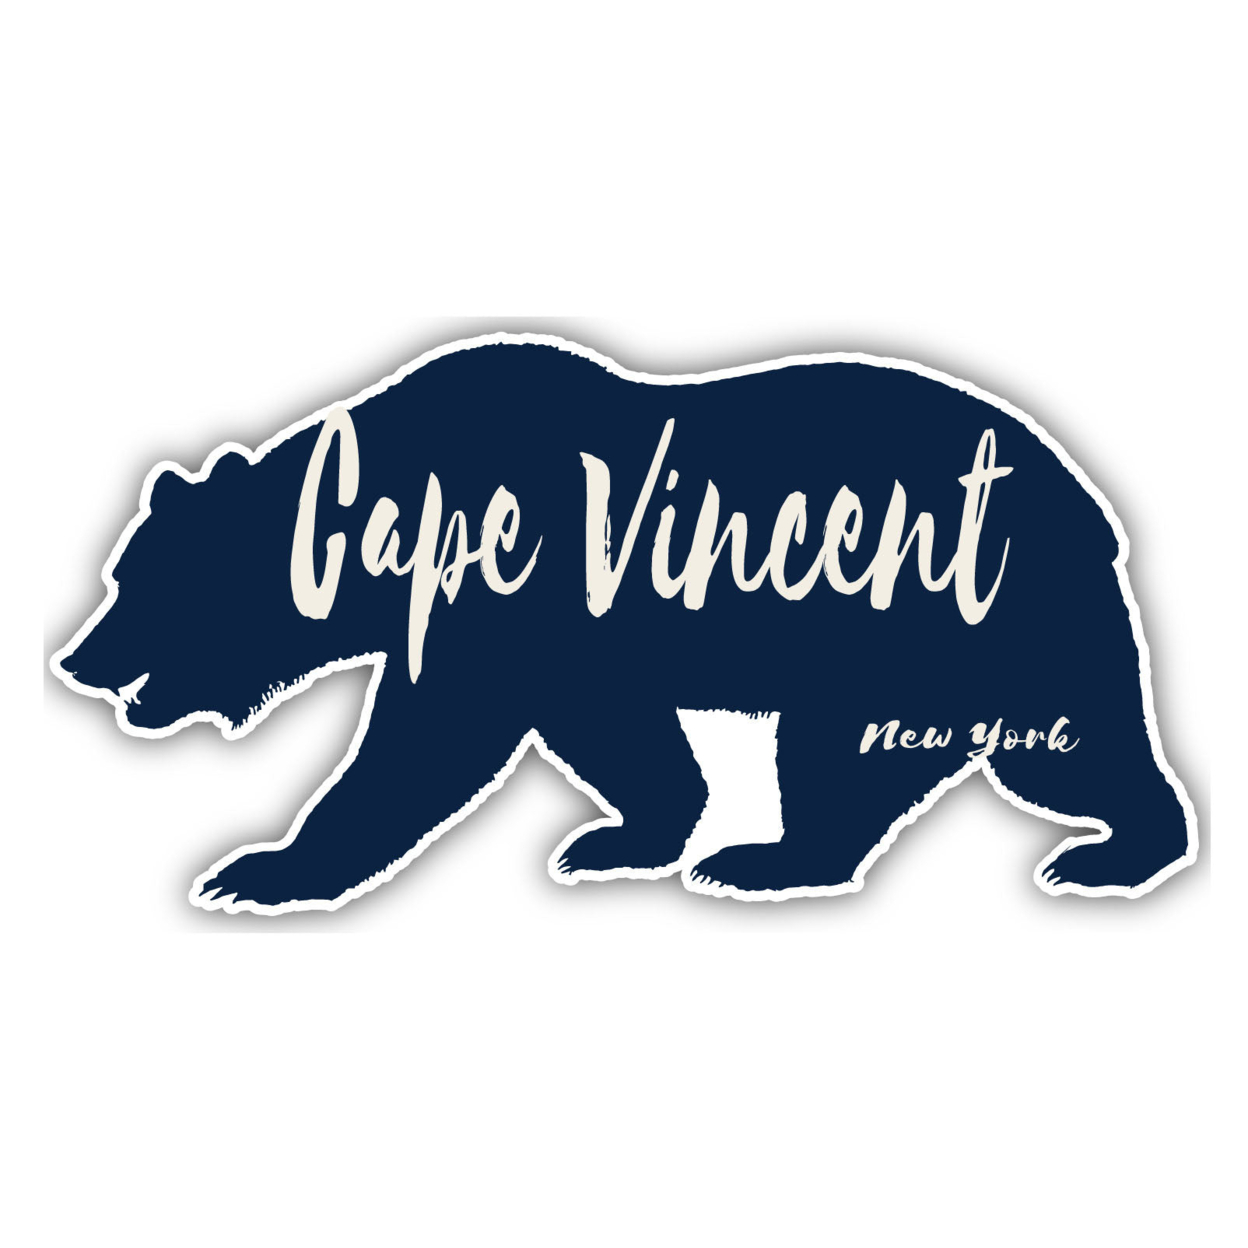 Cape Vincent New York Souvenir Decorative Stickers (Choose Theme And Size) - 4-Pack, 12-Inch, Bear